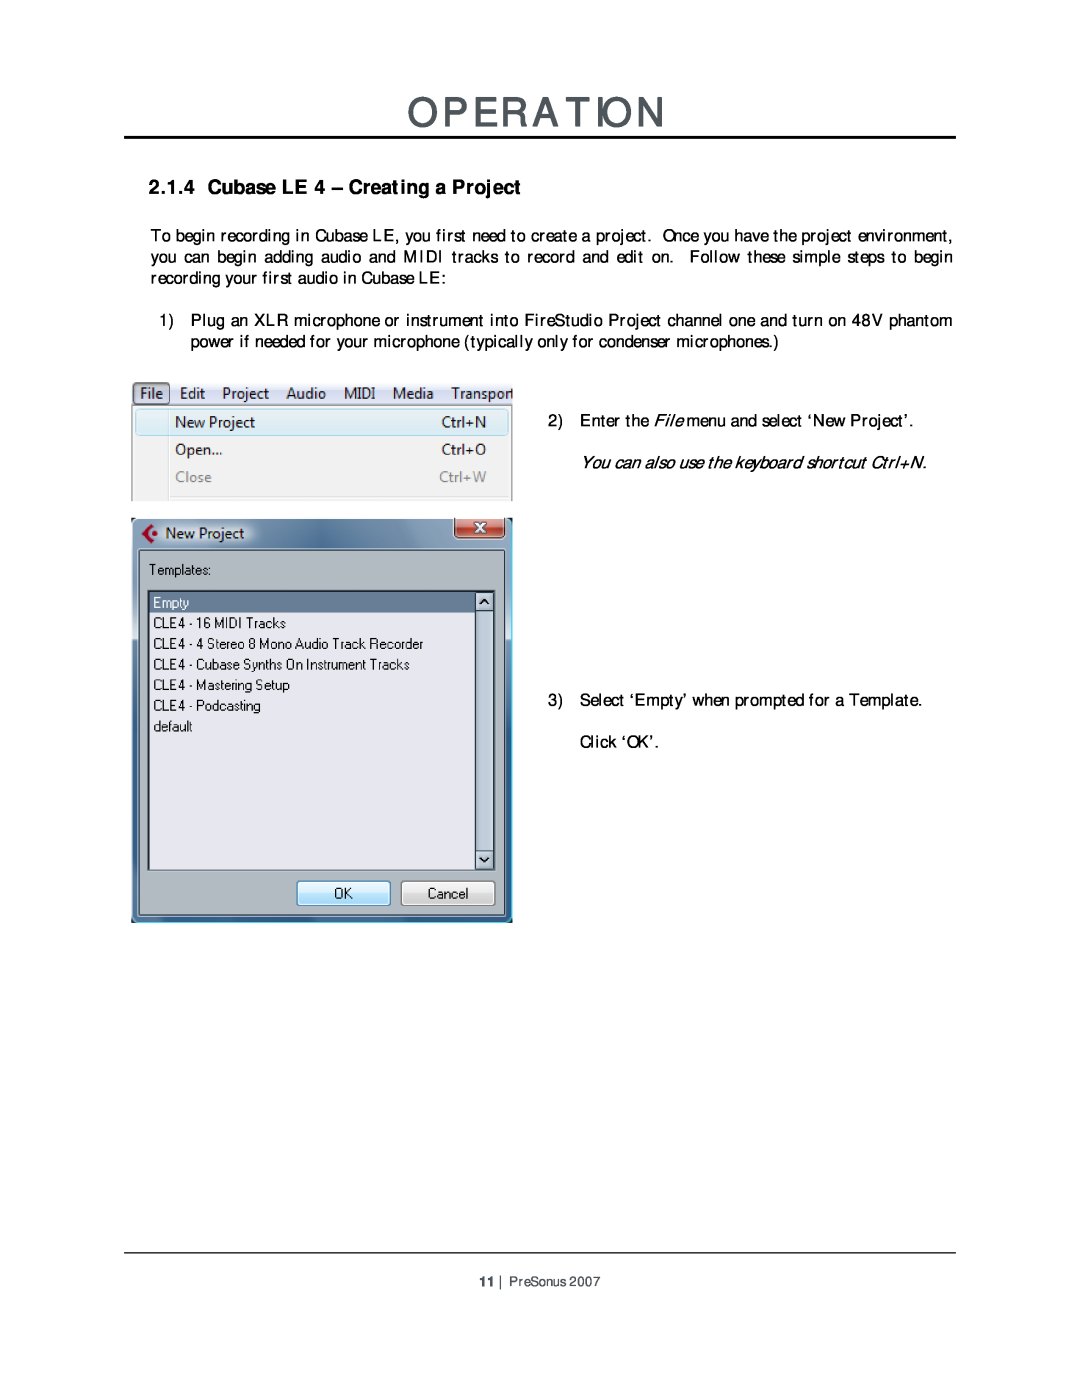 Presonus Audio electronic Version 1.0 user manual Cubase LE 4 - Creating a Project, Operation 